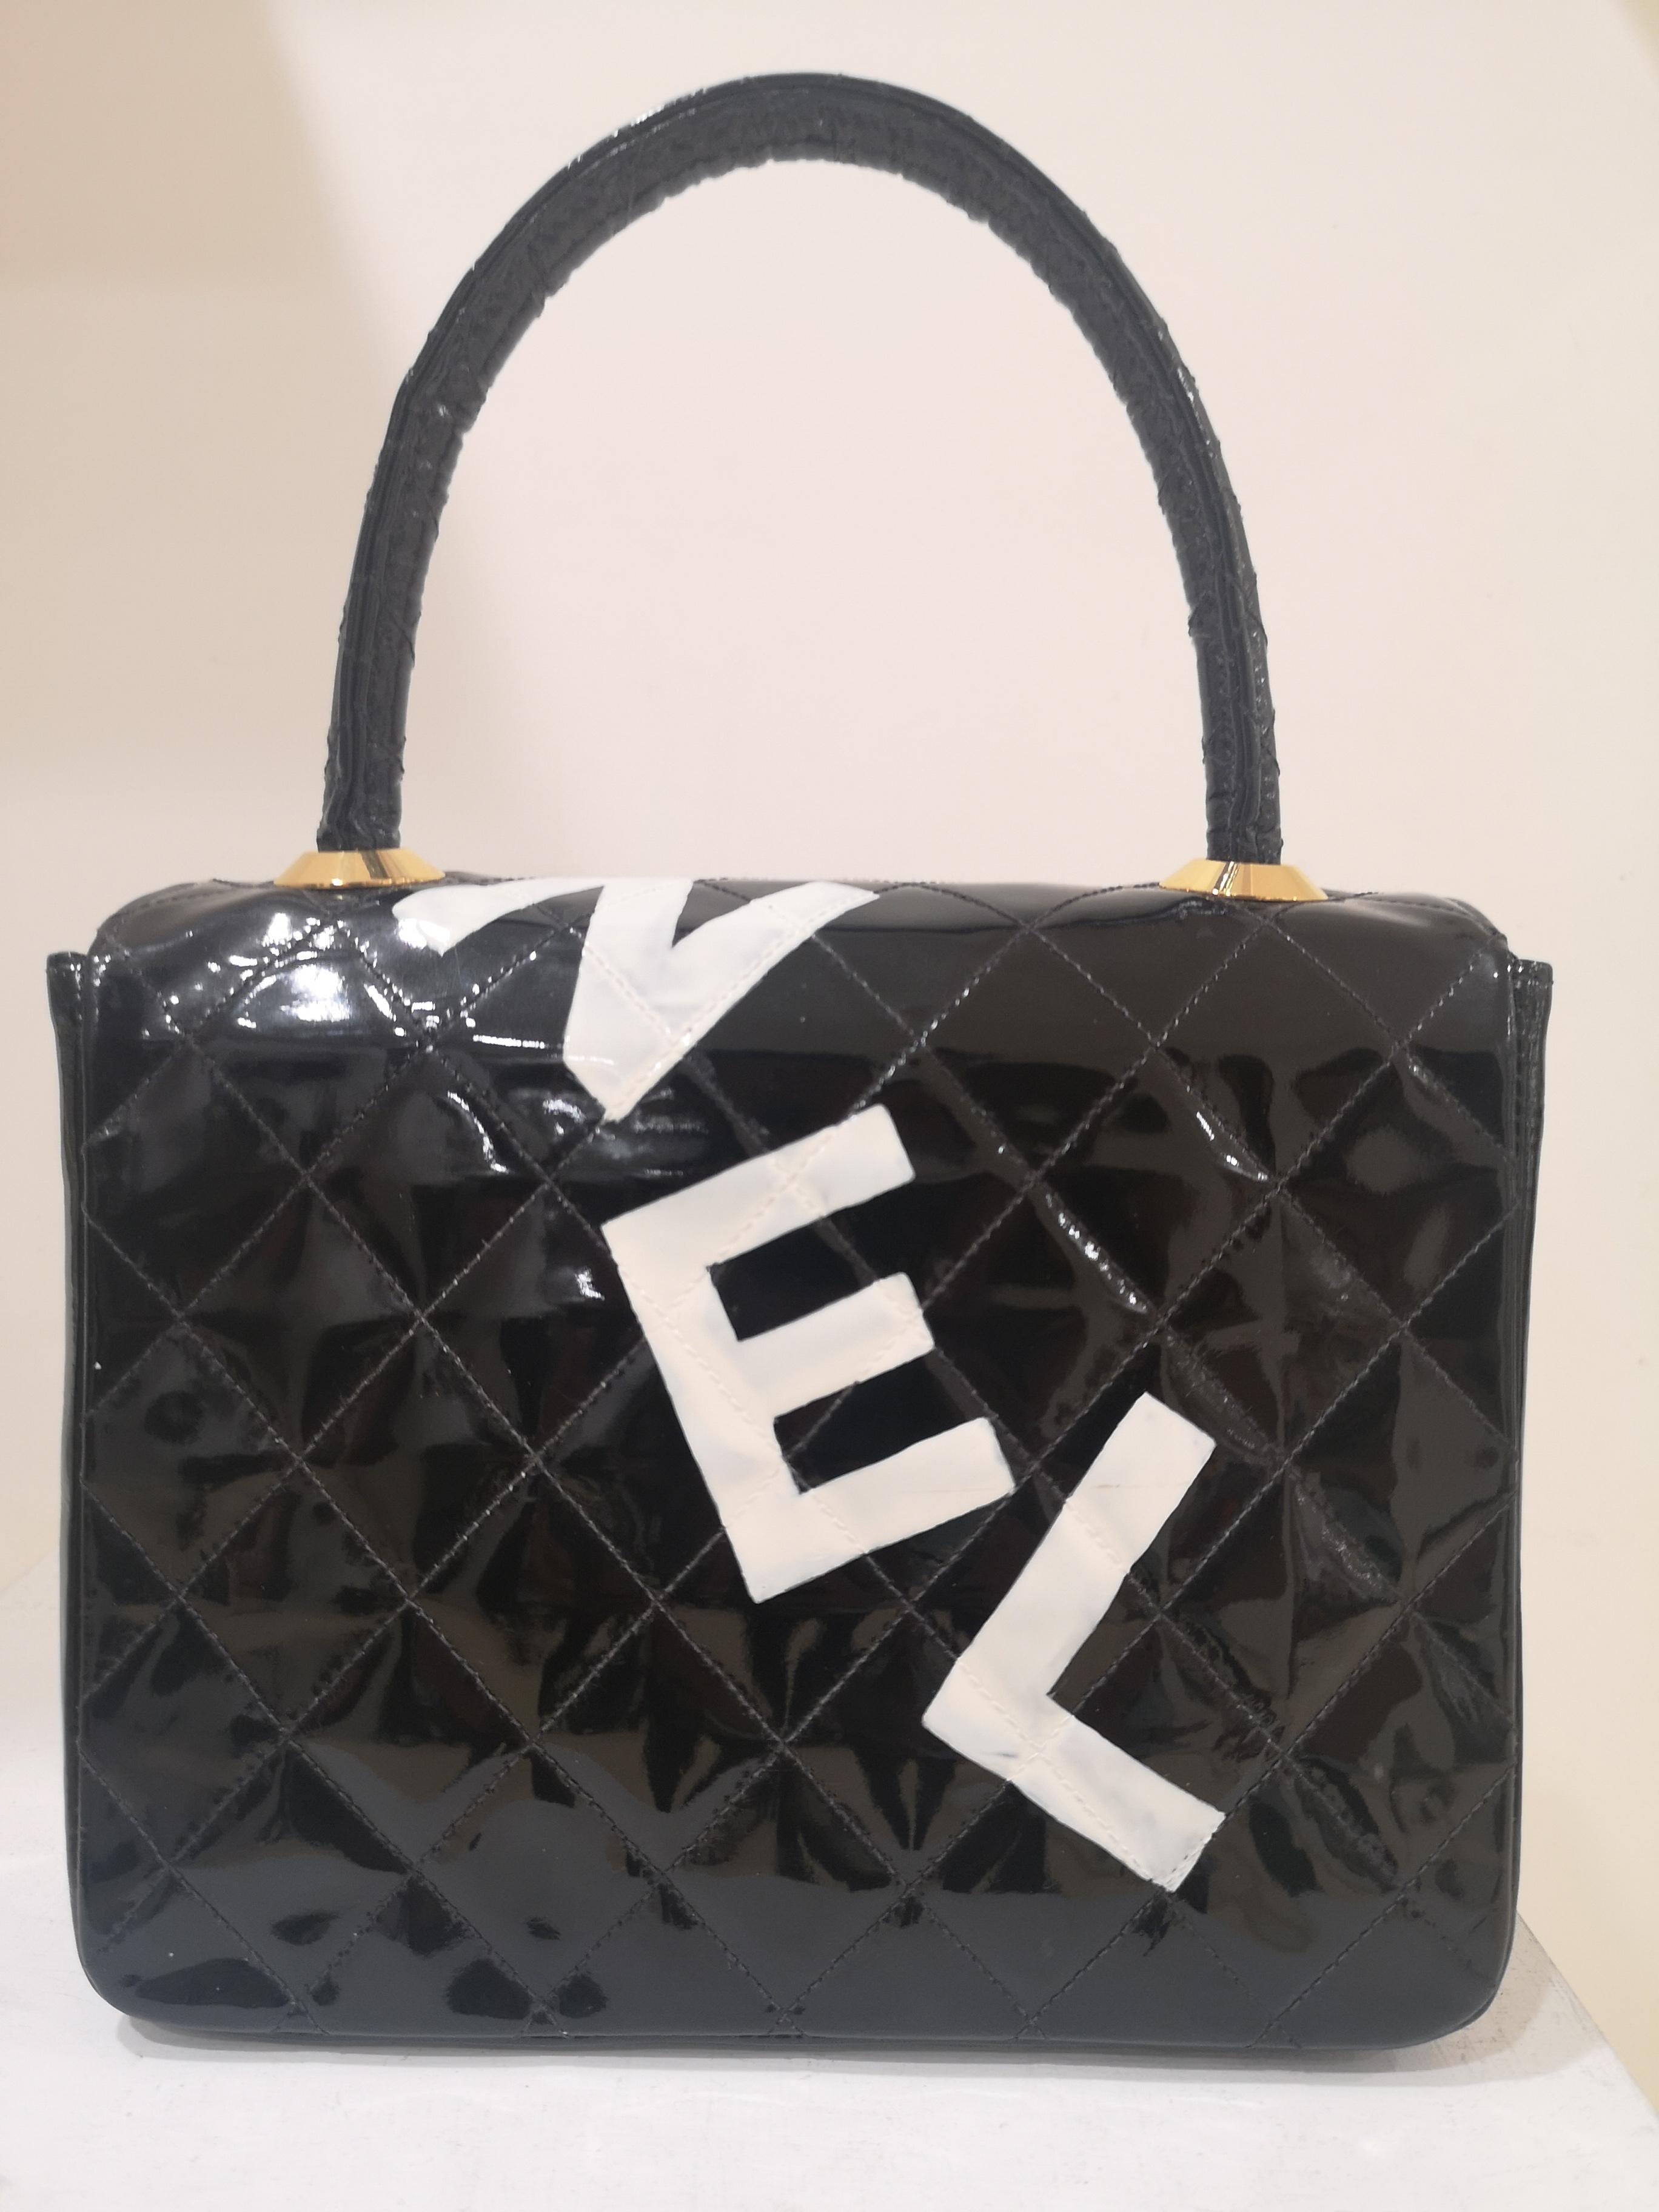 Black Chanel black patent leather handbag 